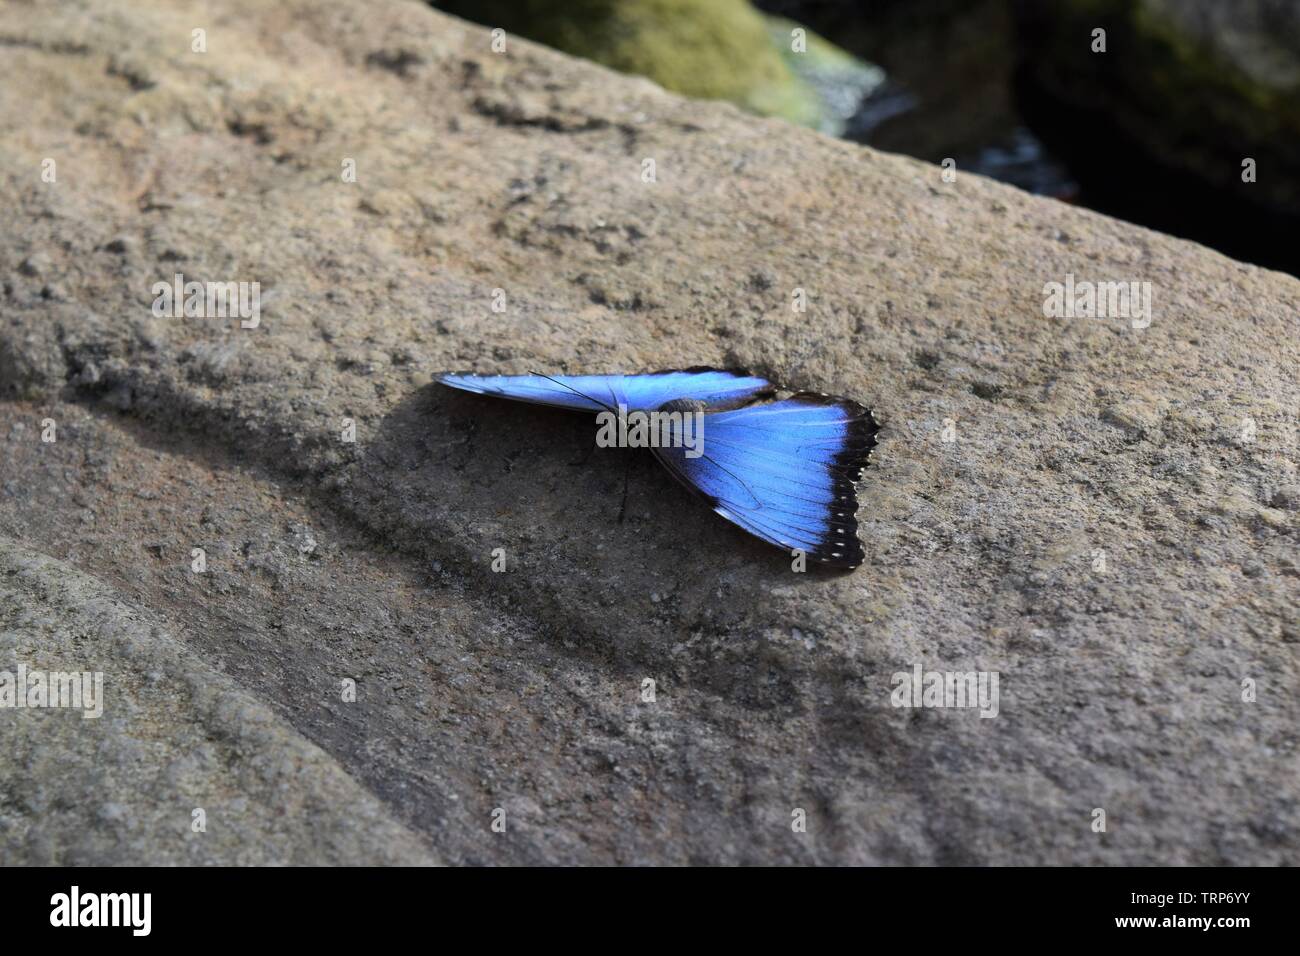 Blue Morpho Butterfly Stock Photo